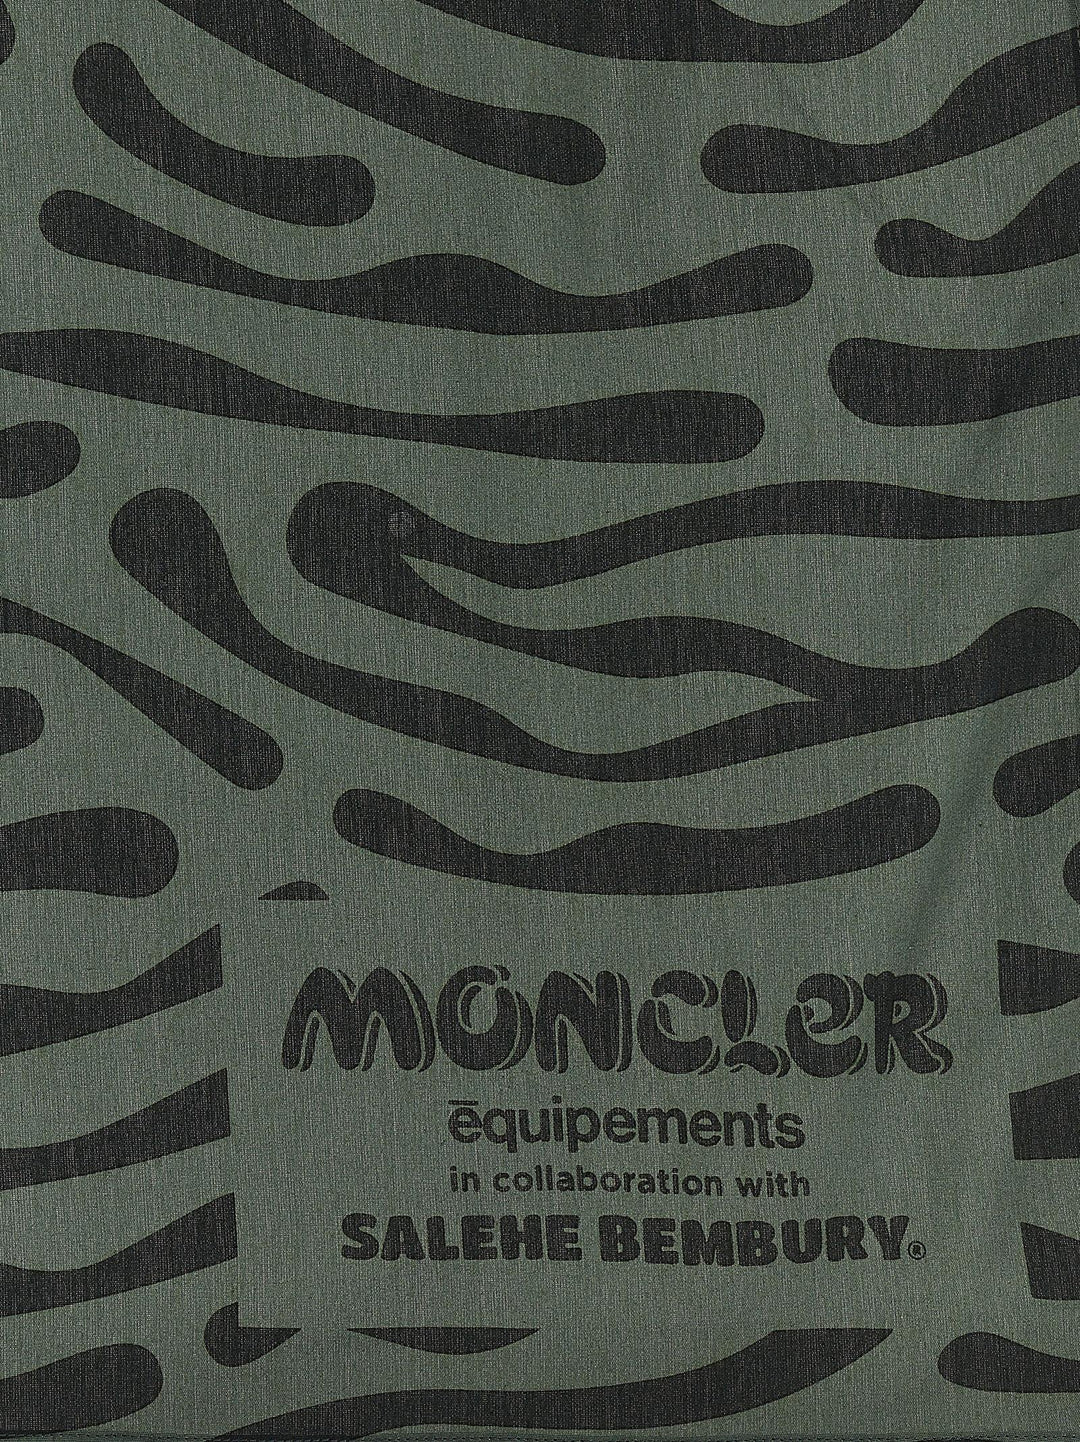 Moncler Genius X Salehe Bembury Scarf Sciarpe Verde